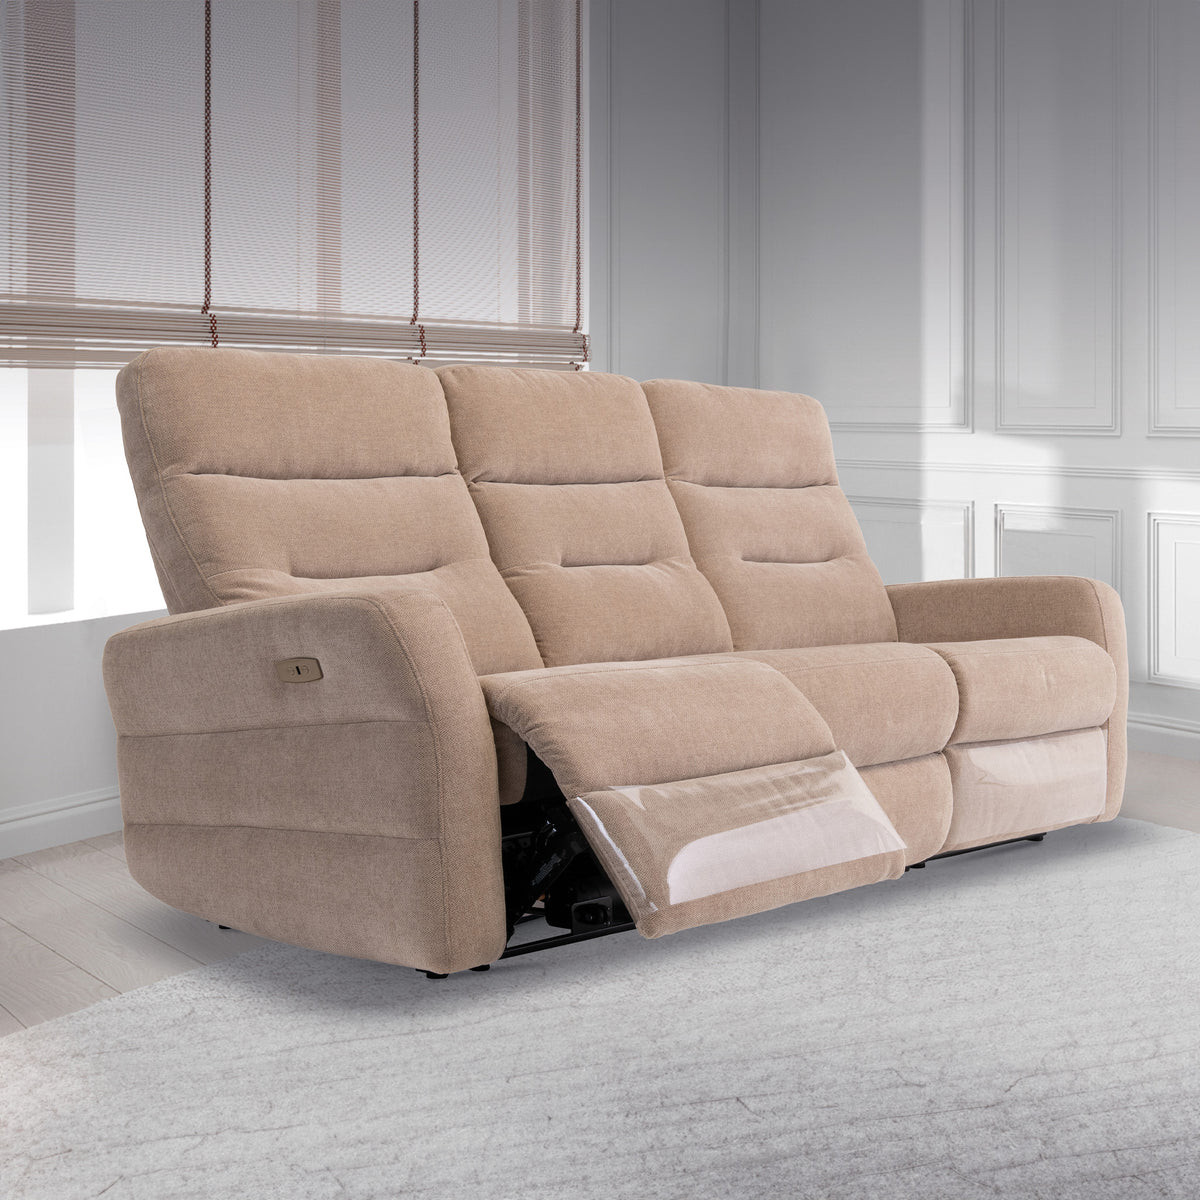 Dalton Mink Fabric Electric Reclining 3 Seater Sofa or living room